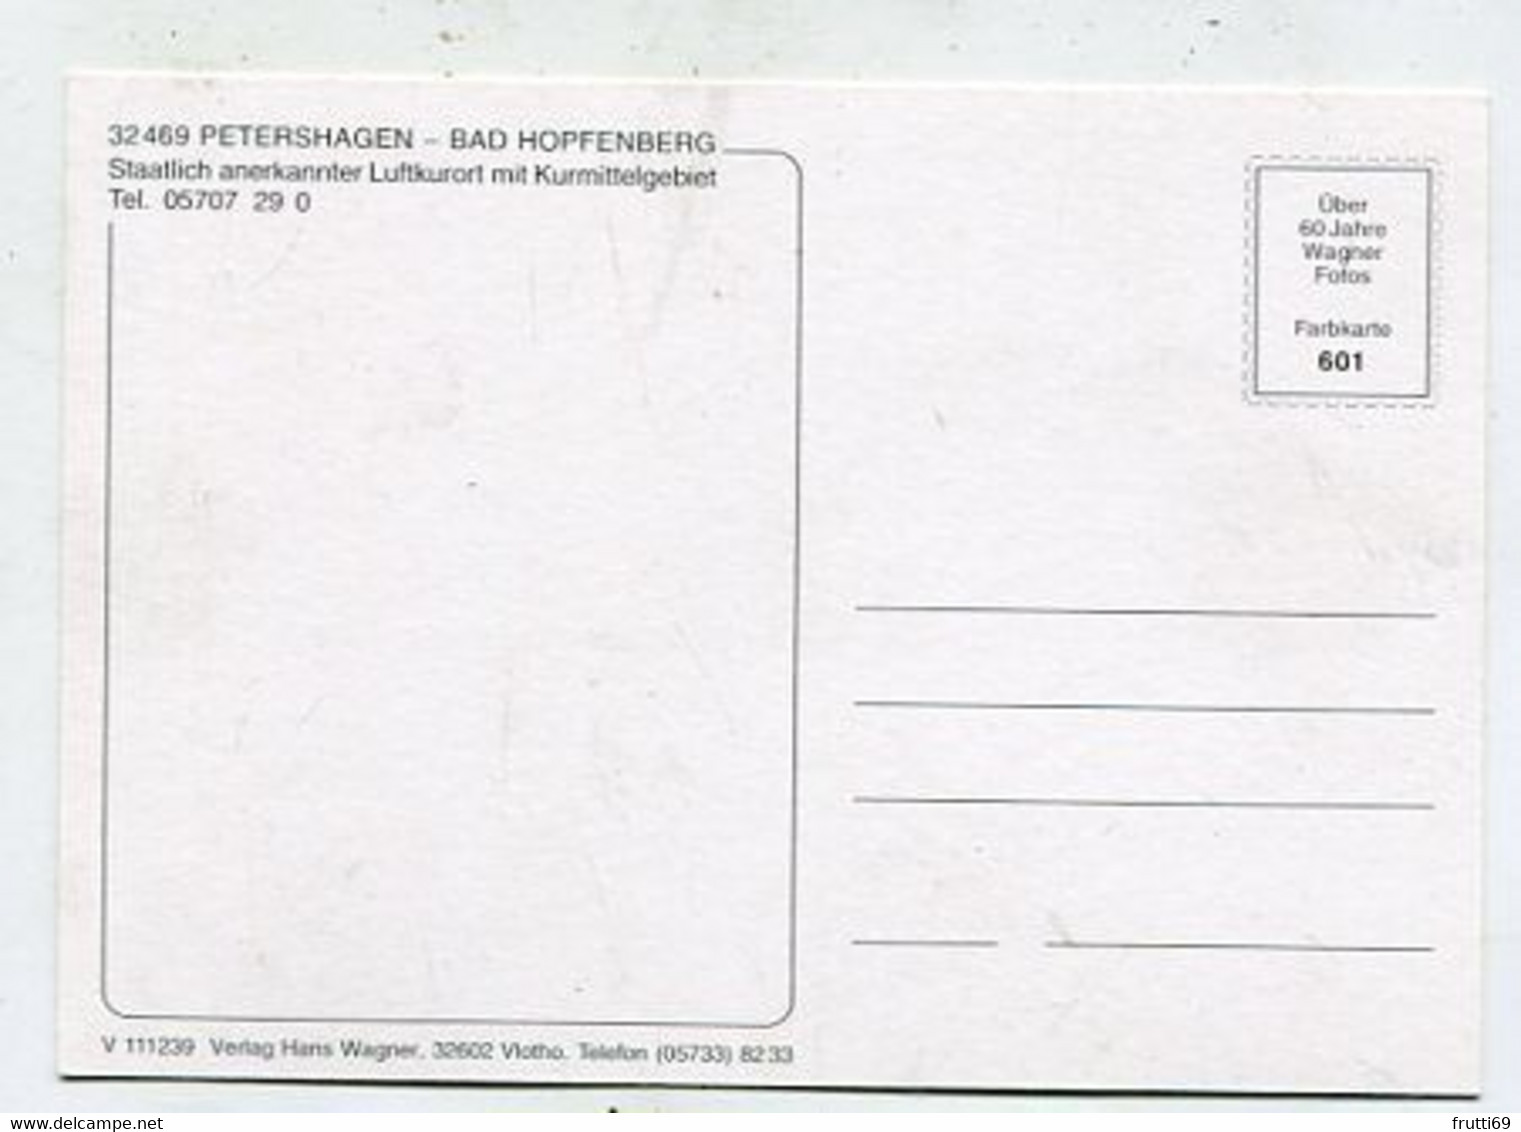 AK 057196 GERMANY - Petershagen - Bad Hopfenberg - Petershagen